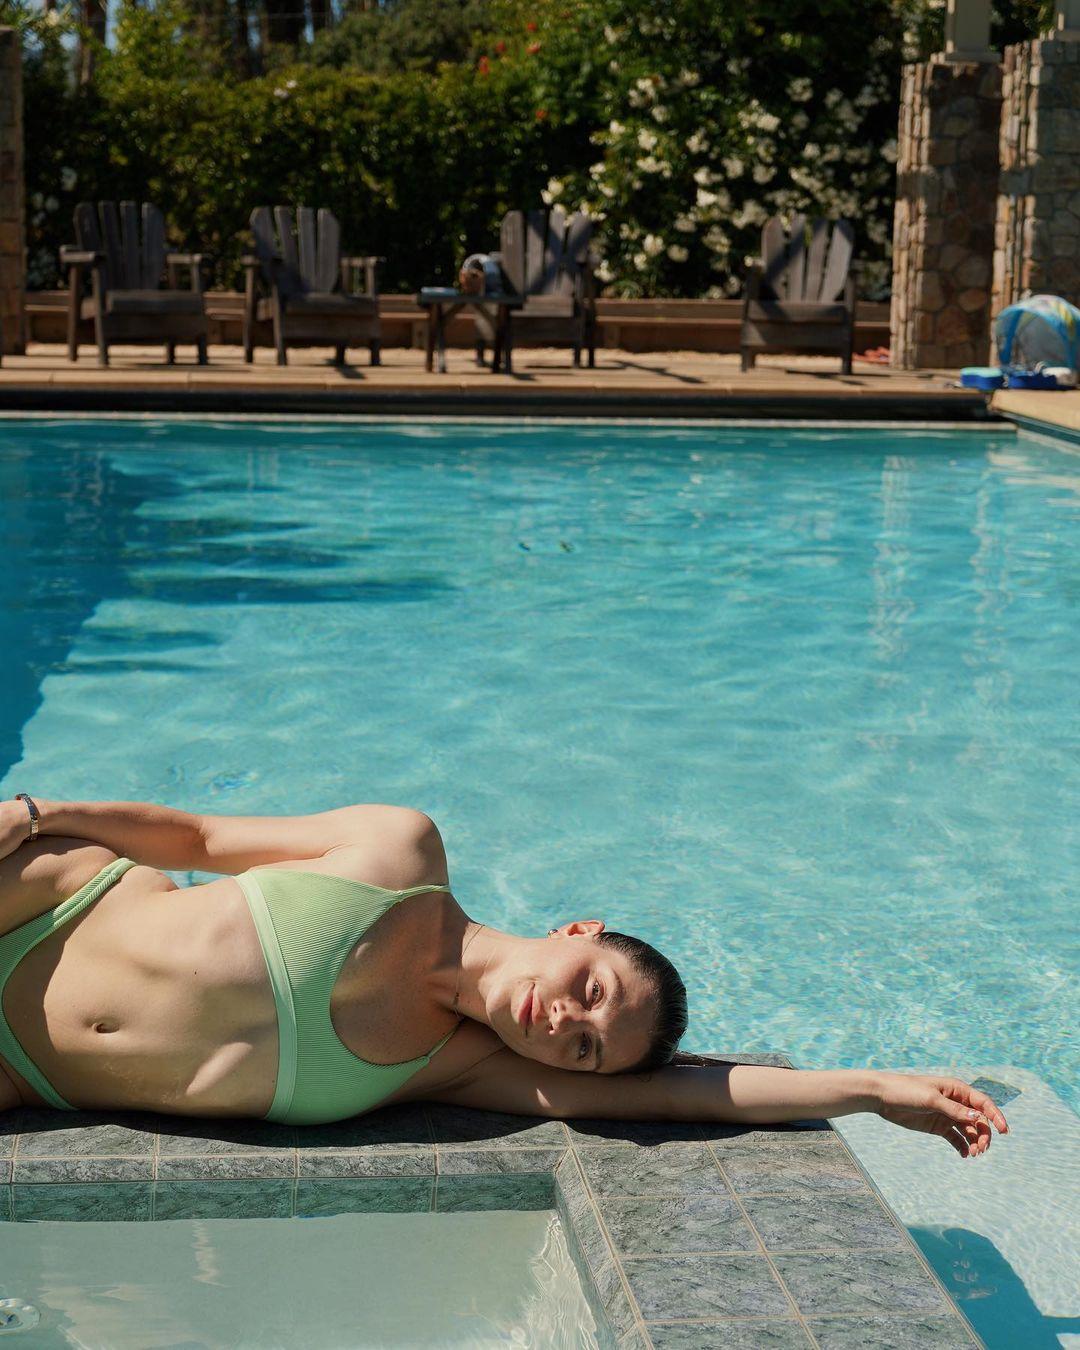 'DWTS' Alum Jenna Johnson Shares Steamy Bikini Pics